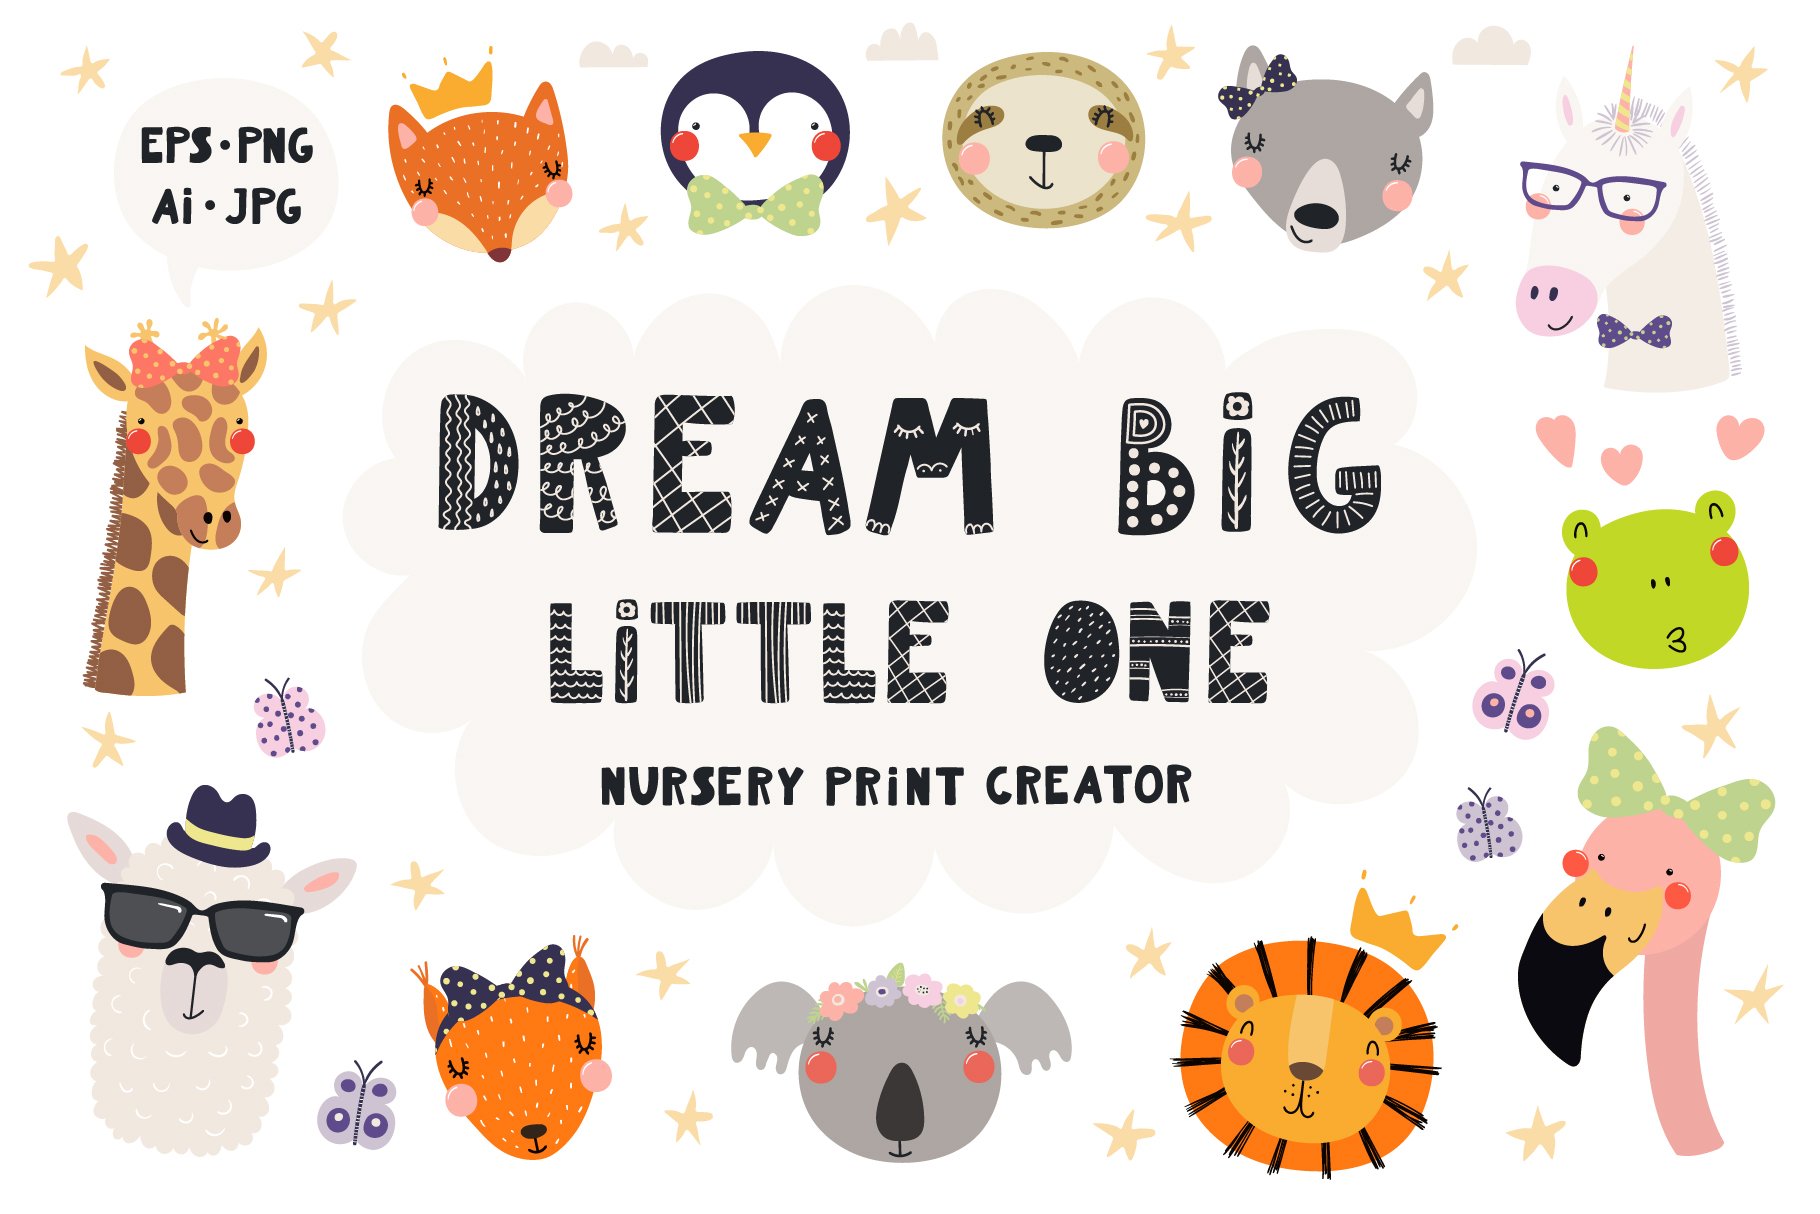 Cute Baby Animals Nursery Creator cover image.